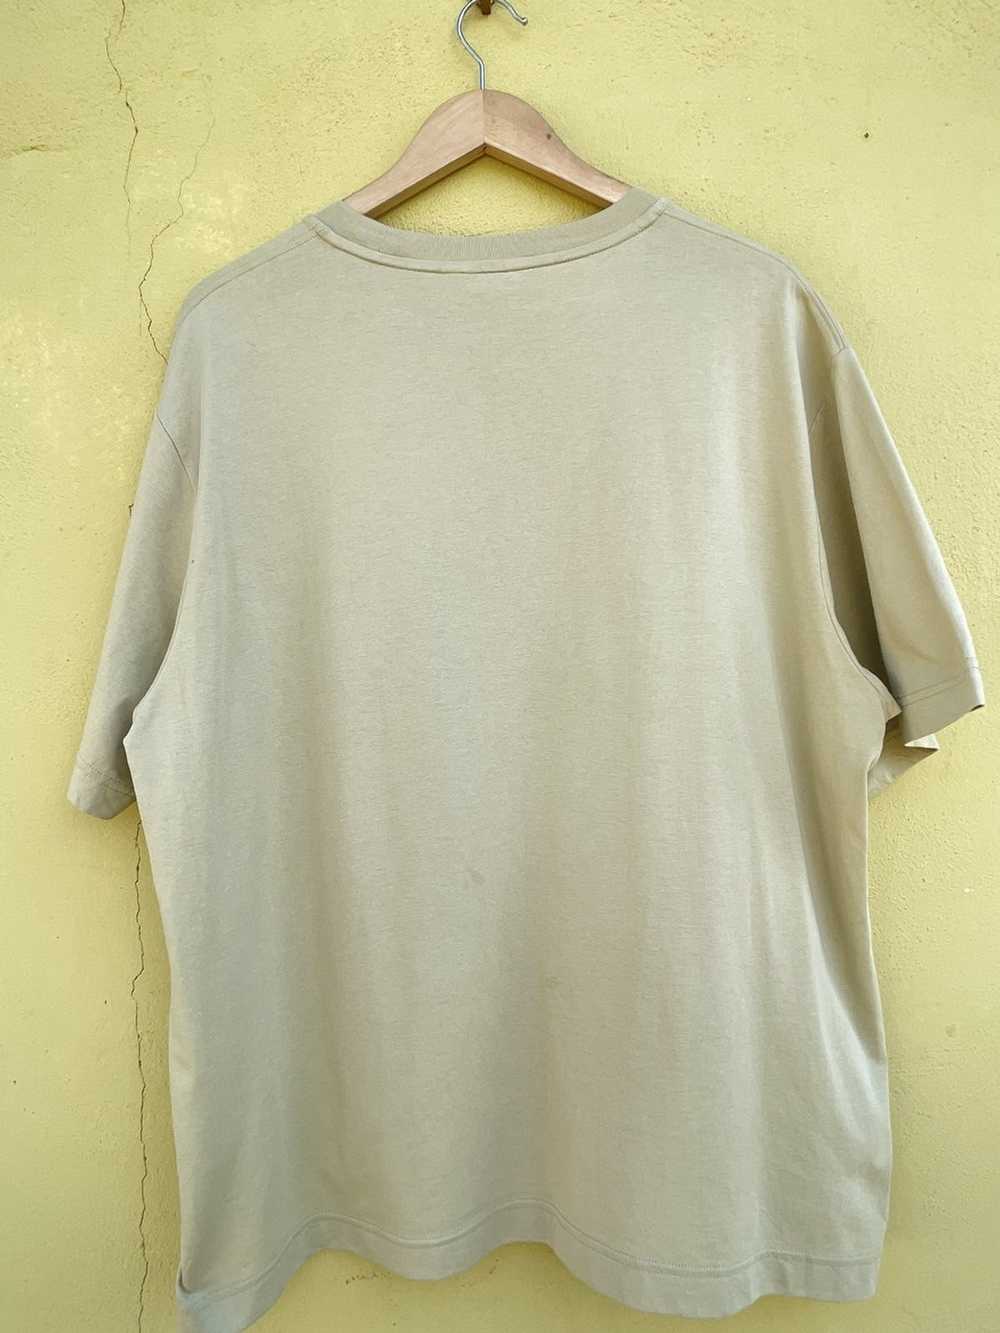 Lemaire × Uniqlo Uniqlo x lemaire plain shirt - image 2